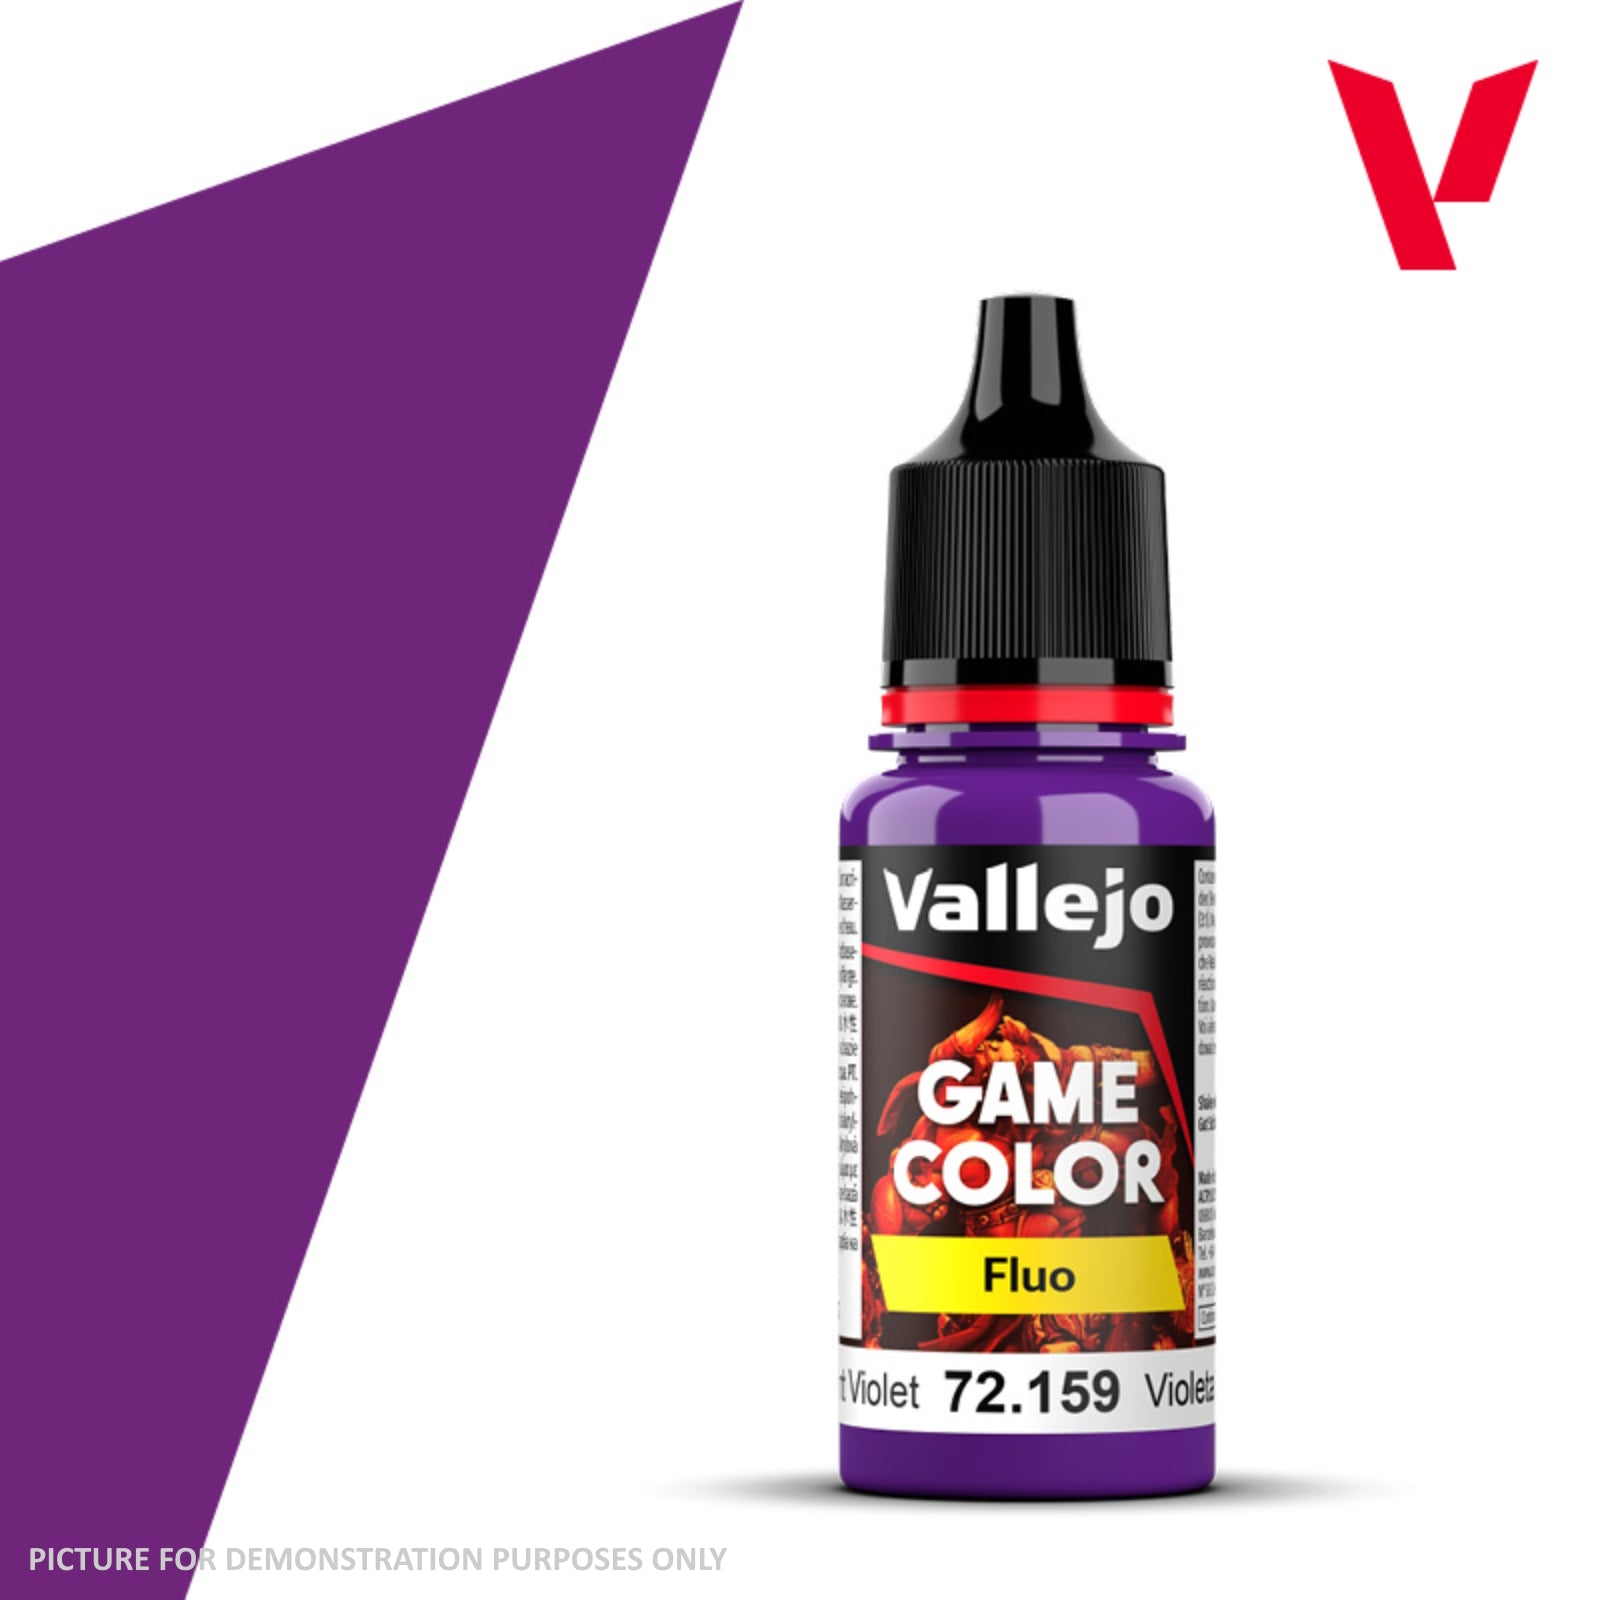 Vallejo Game Colour Fluo - 72.159 Violet 18ml